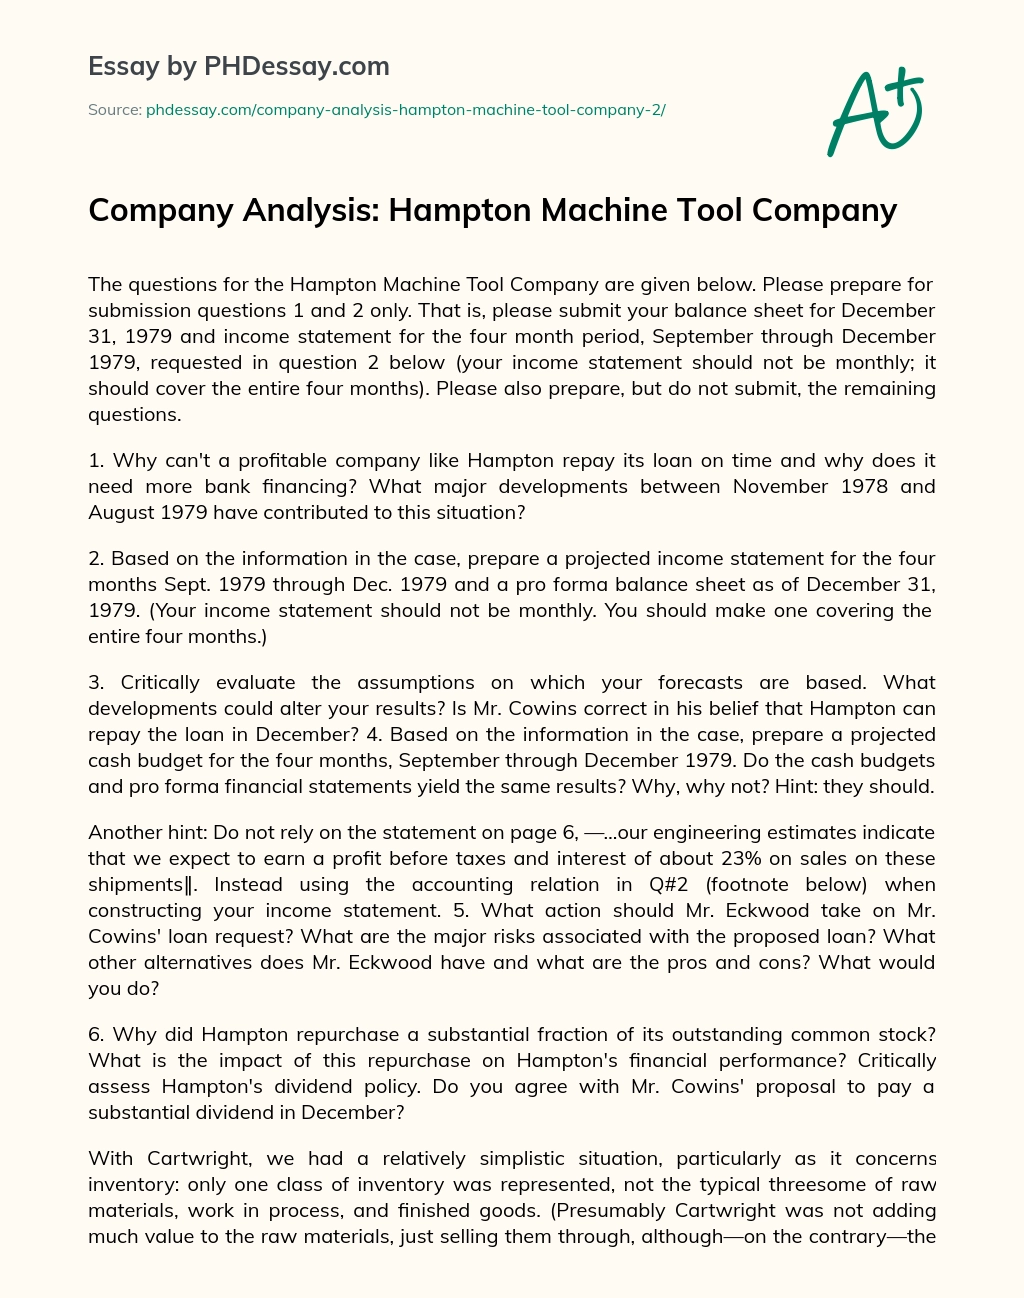 Company Analysis: Hampton Machine Tool Company essay